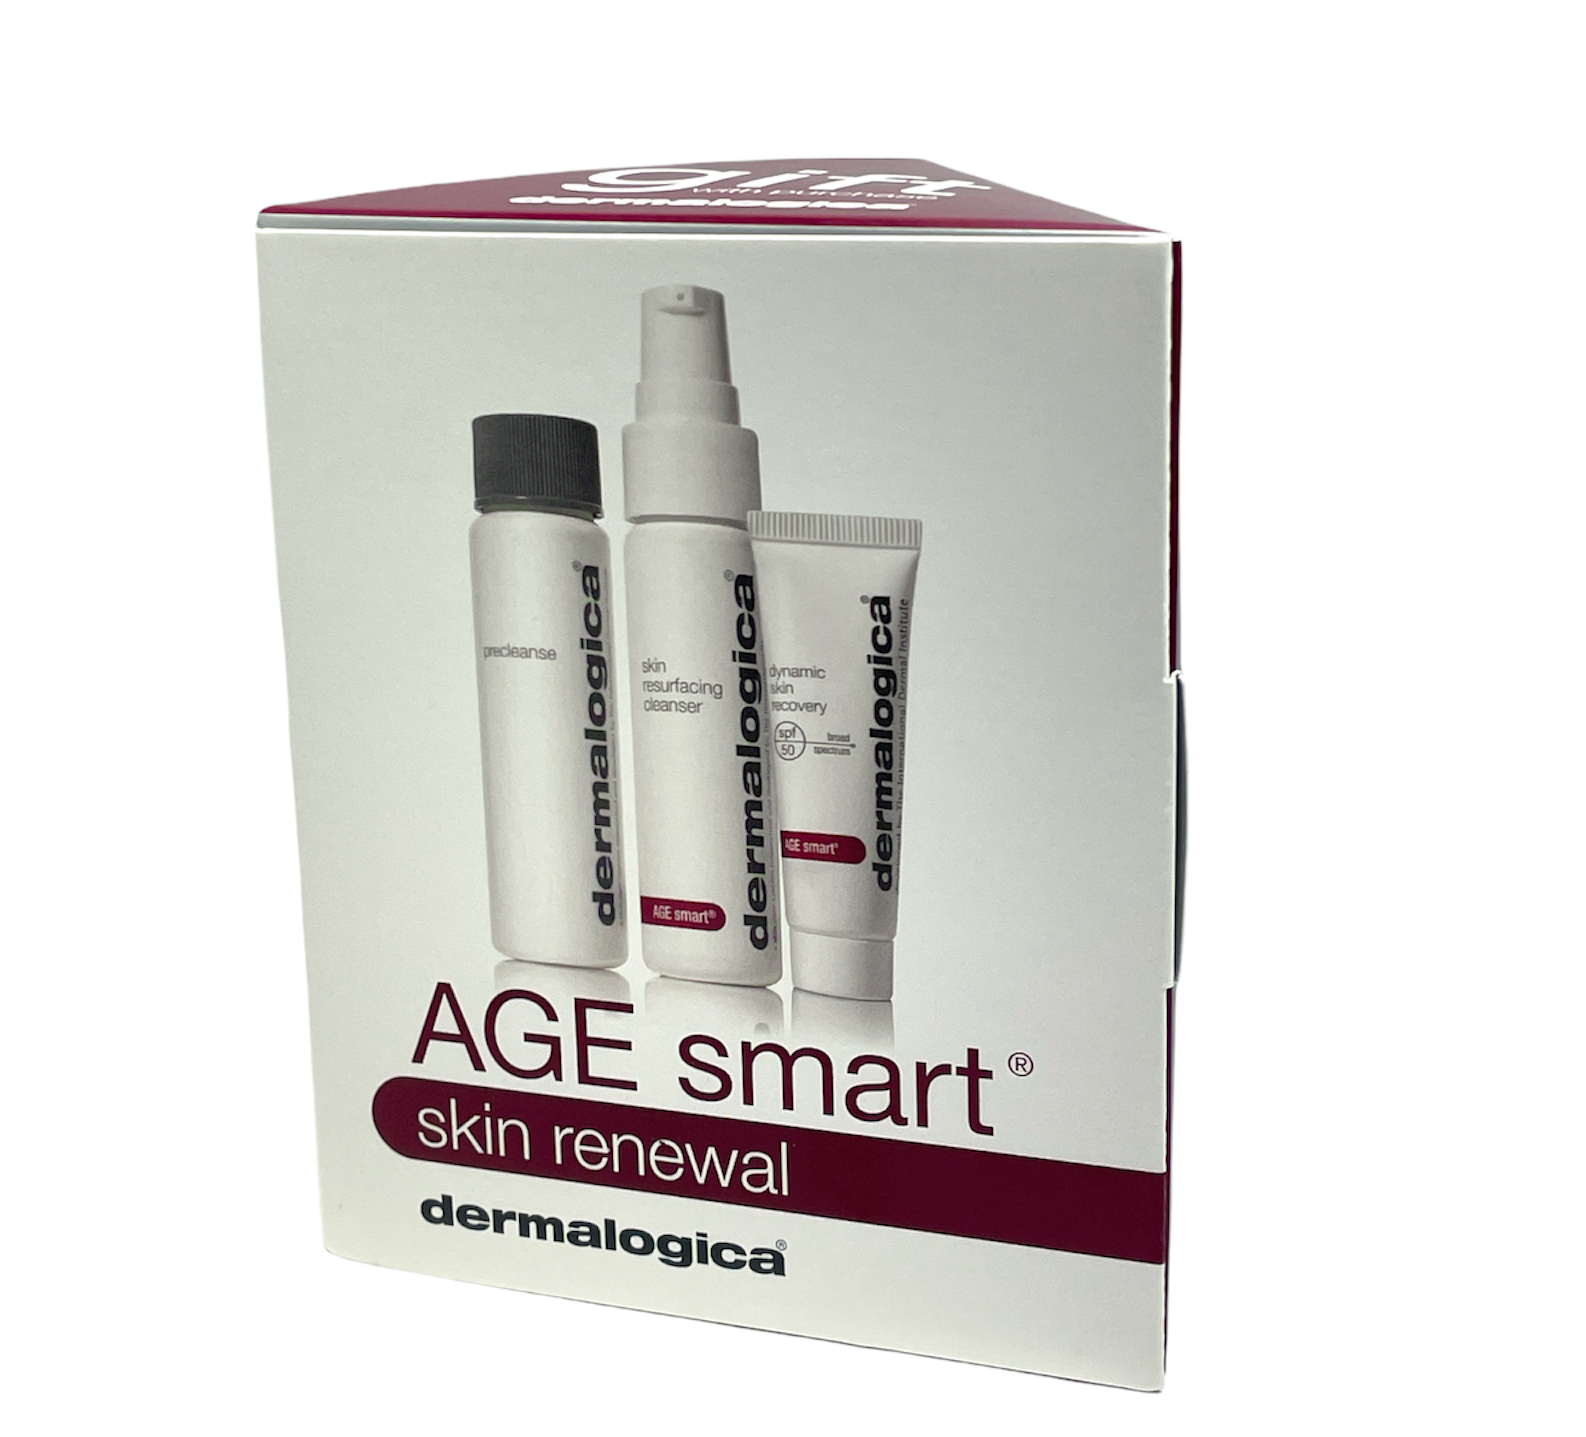 Dermalogica Age Smart Skin Renewal *3 Piece-Gift* New In Box